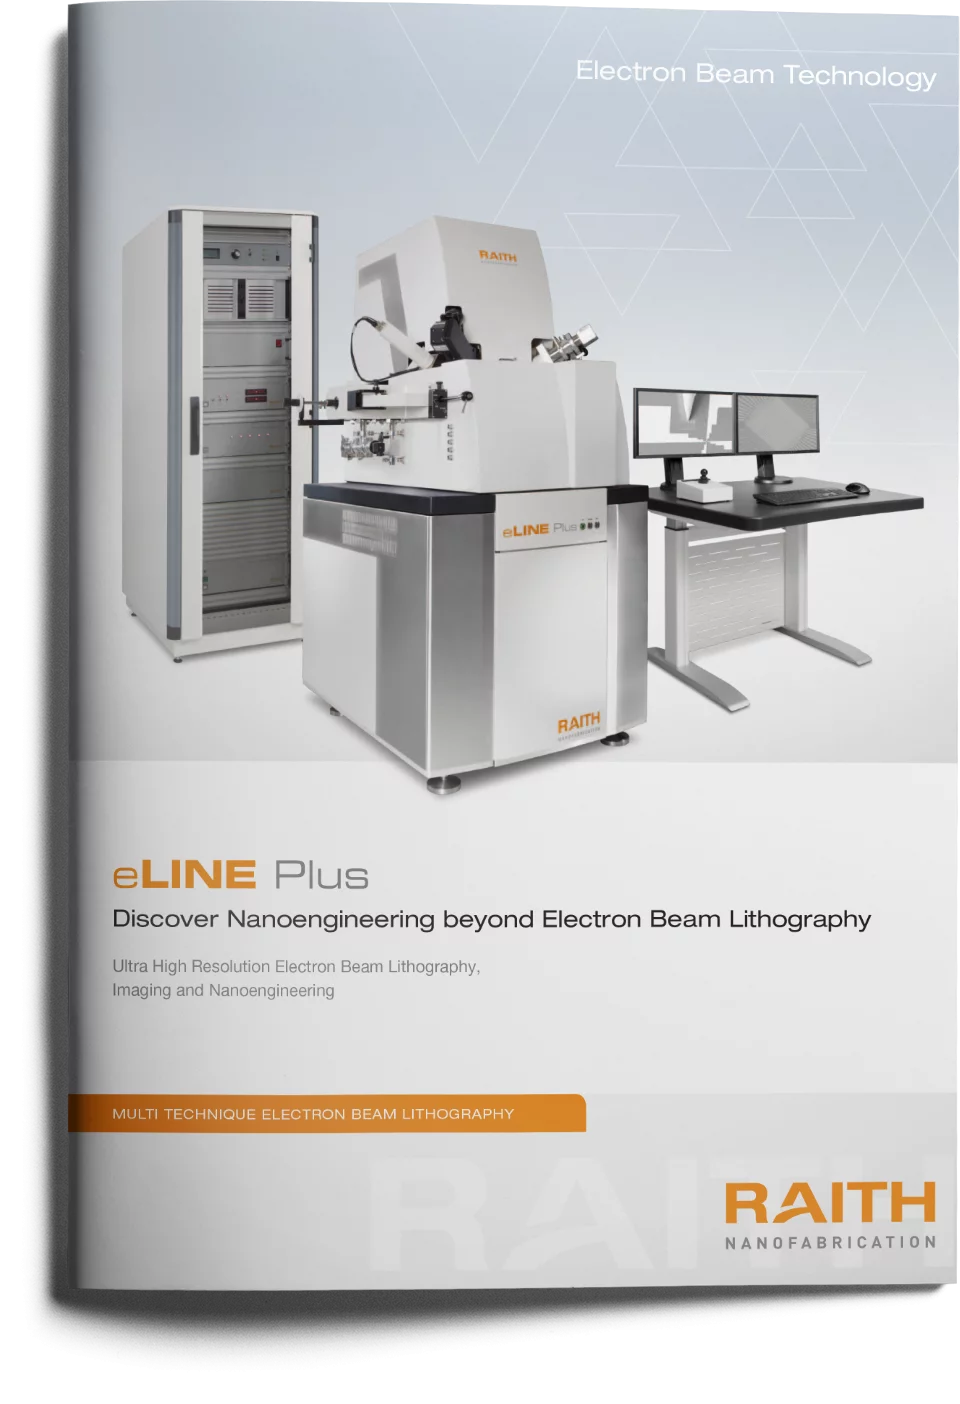 Illustration of the eLINE Plus brochure